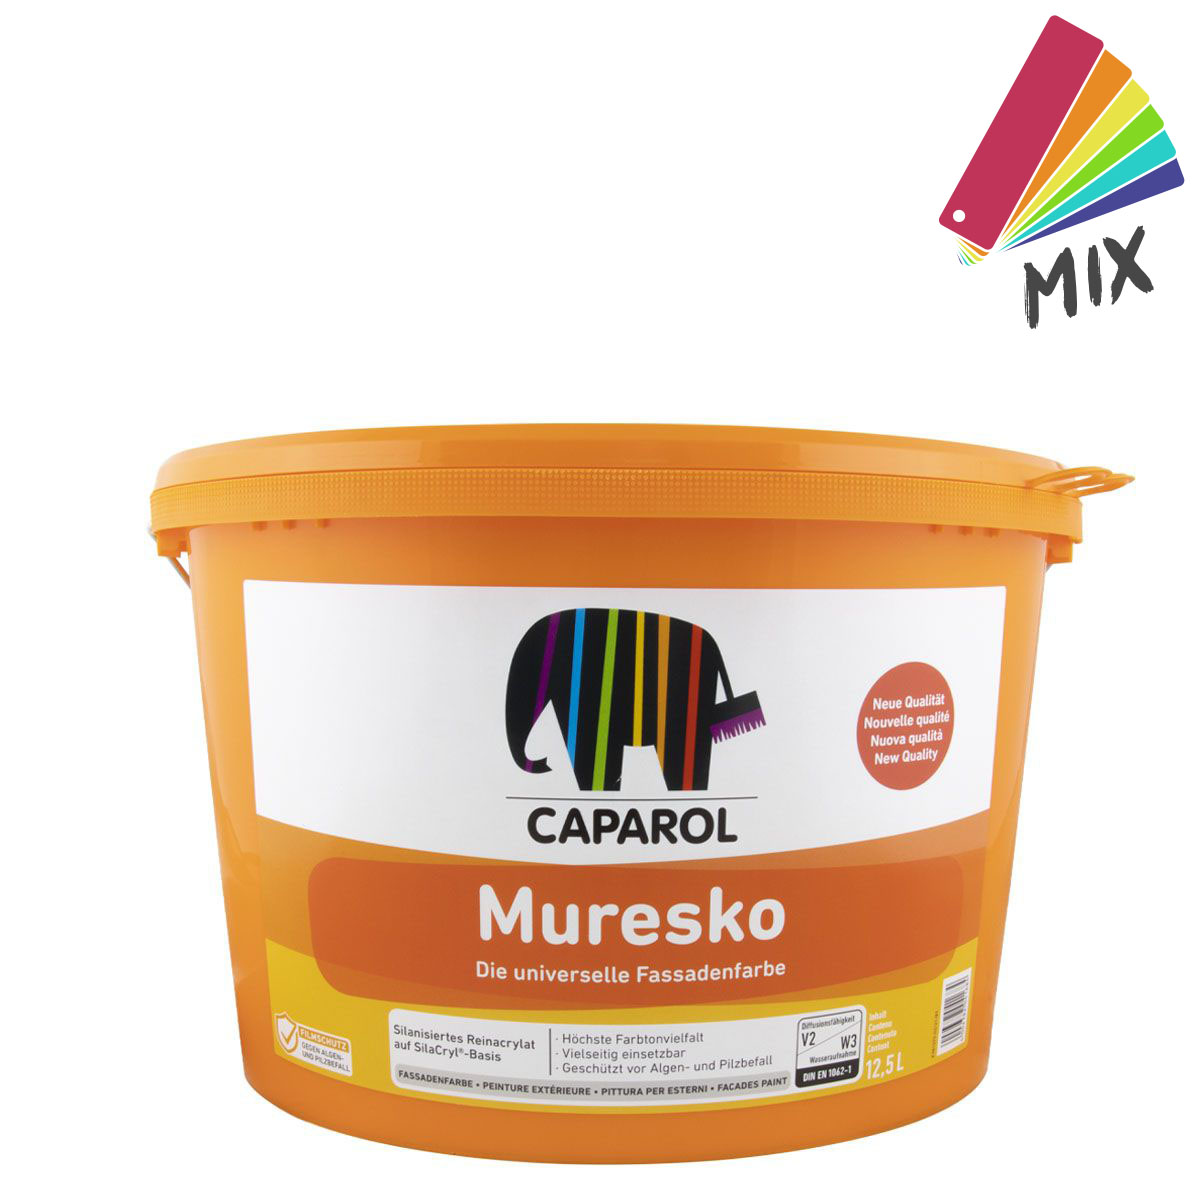 Caparol Muresko SilaCryl Fassadenfarbe 12,5L wunschfarbton PG A, Reinacrylat-Fassadenfarbe